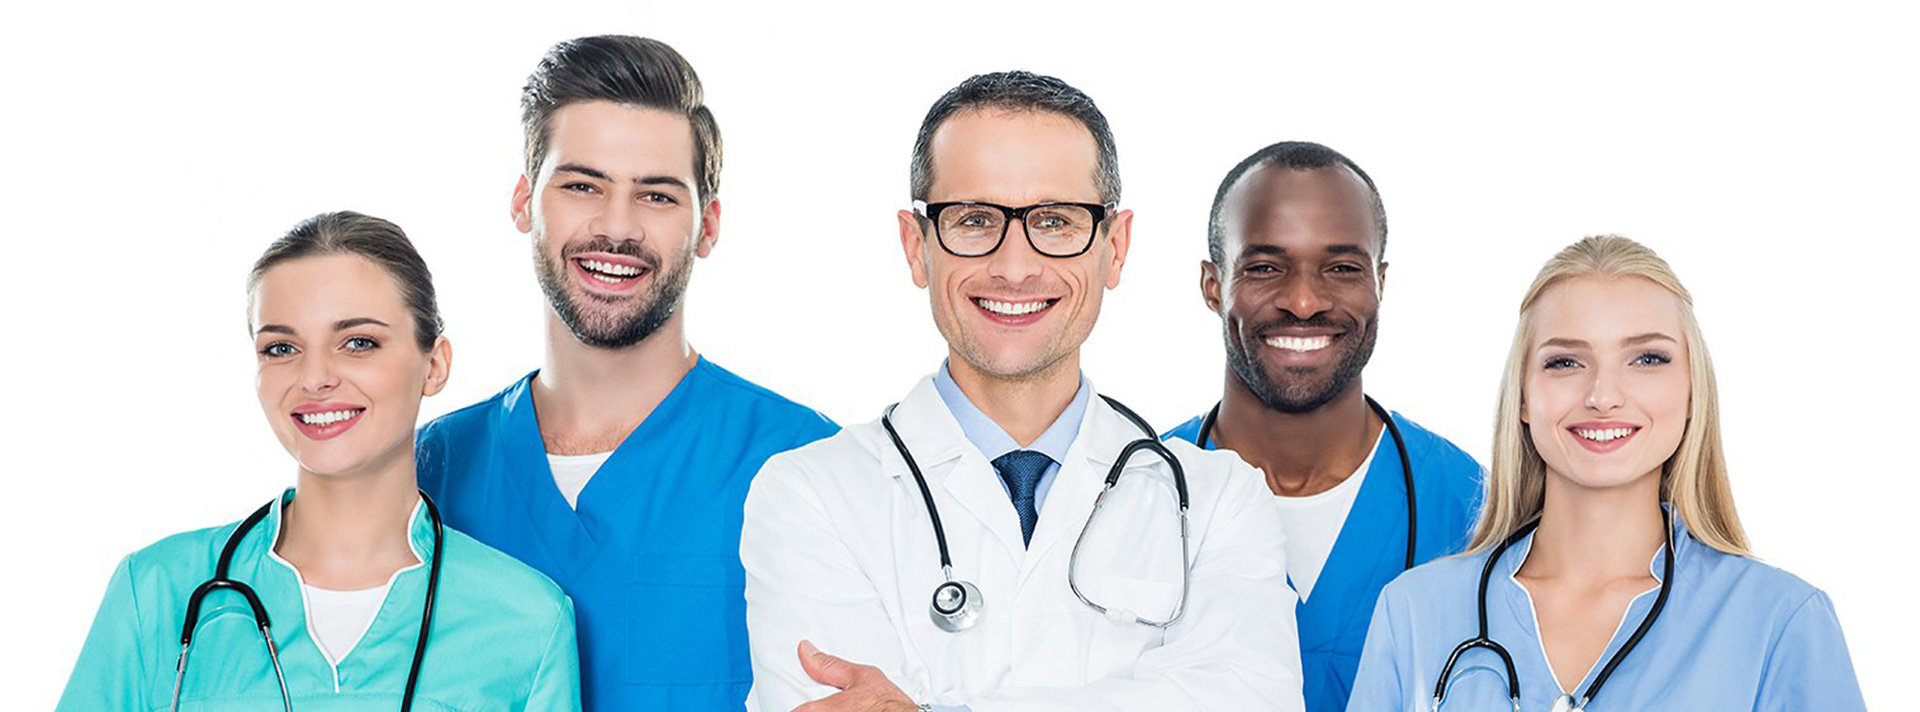 Medical Marijuana Doctors in Chumuckla, Florida 32565